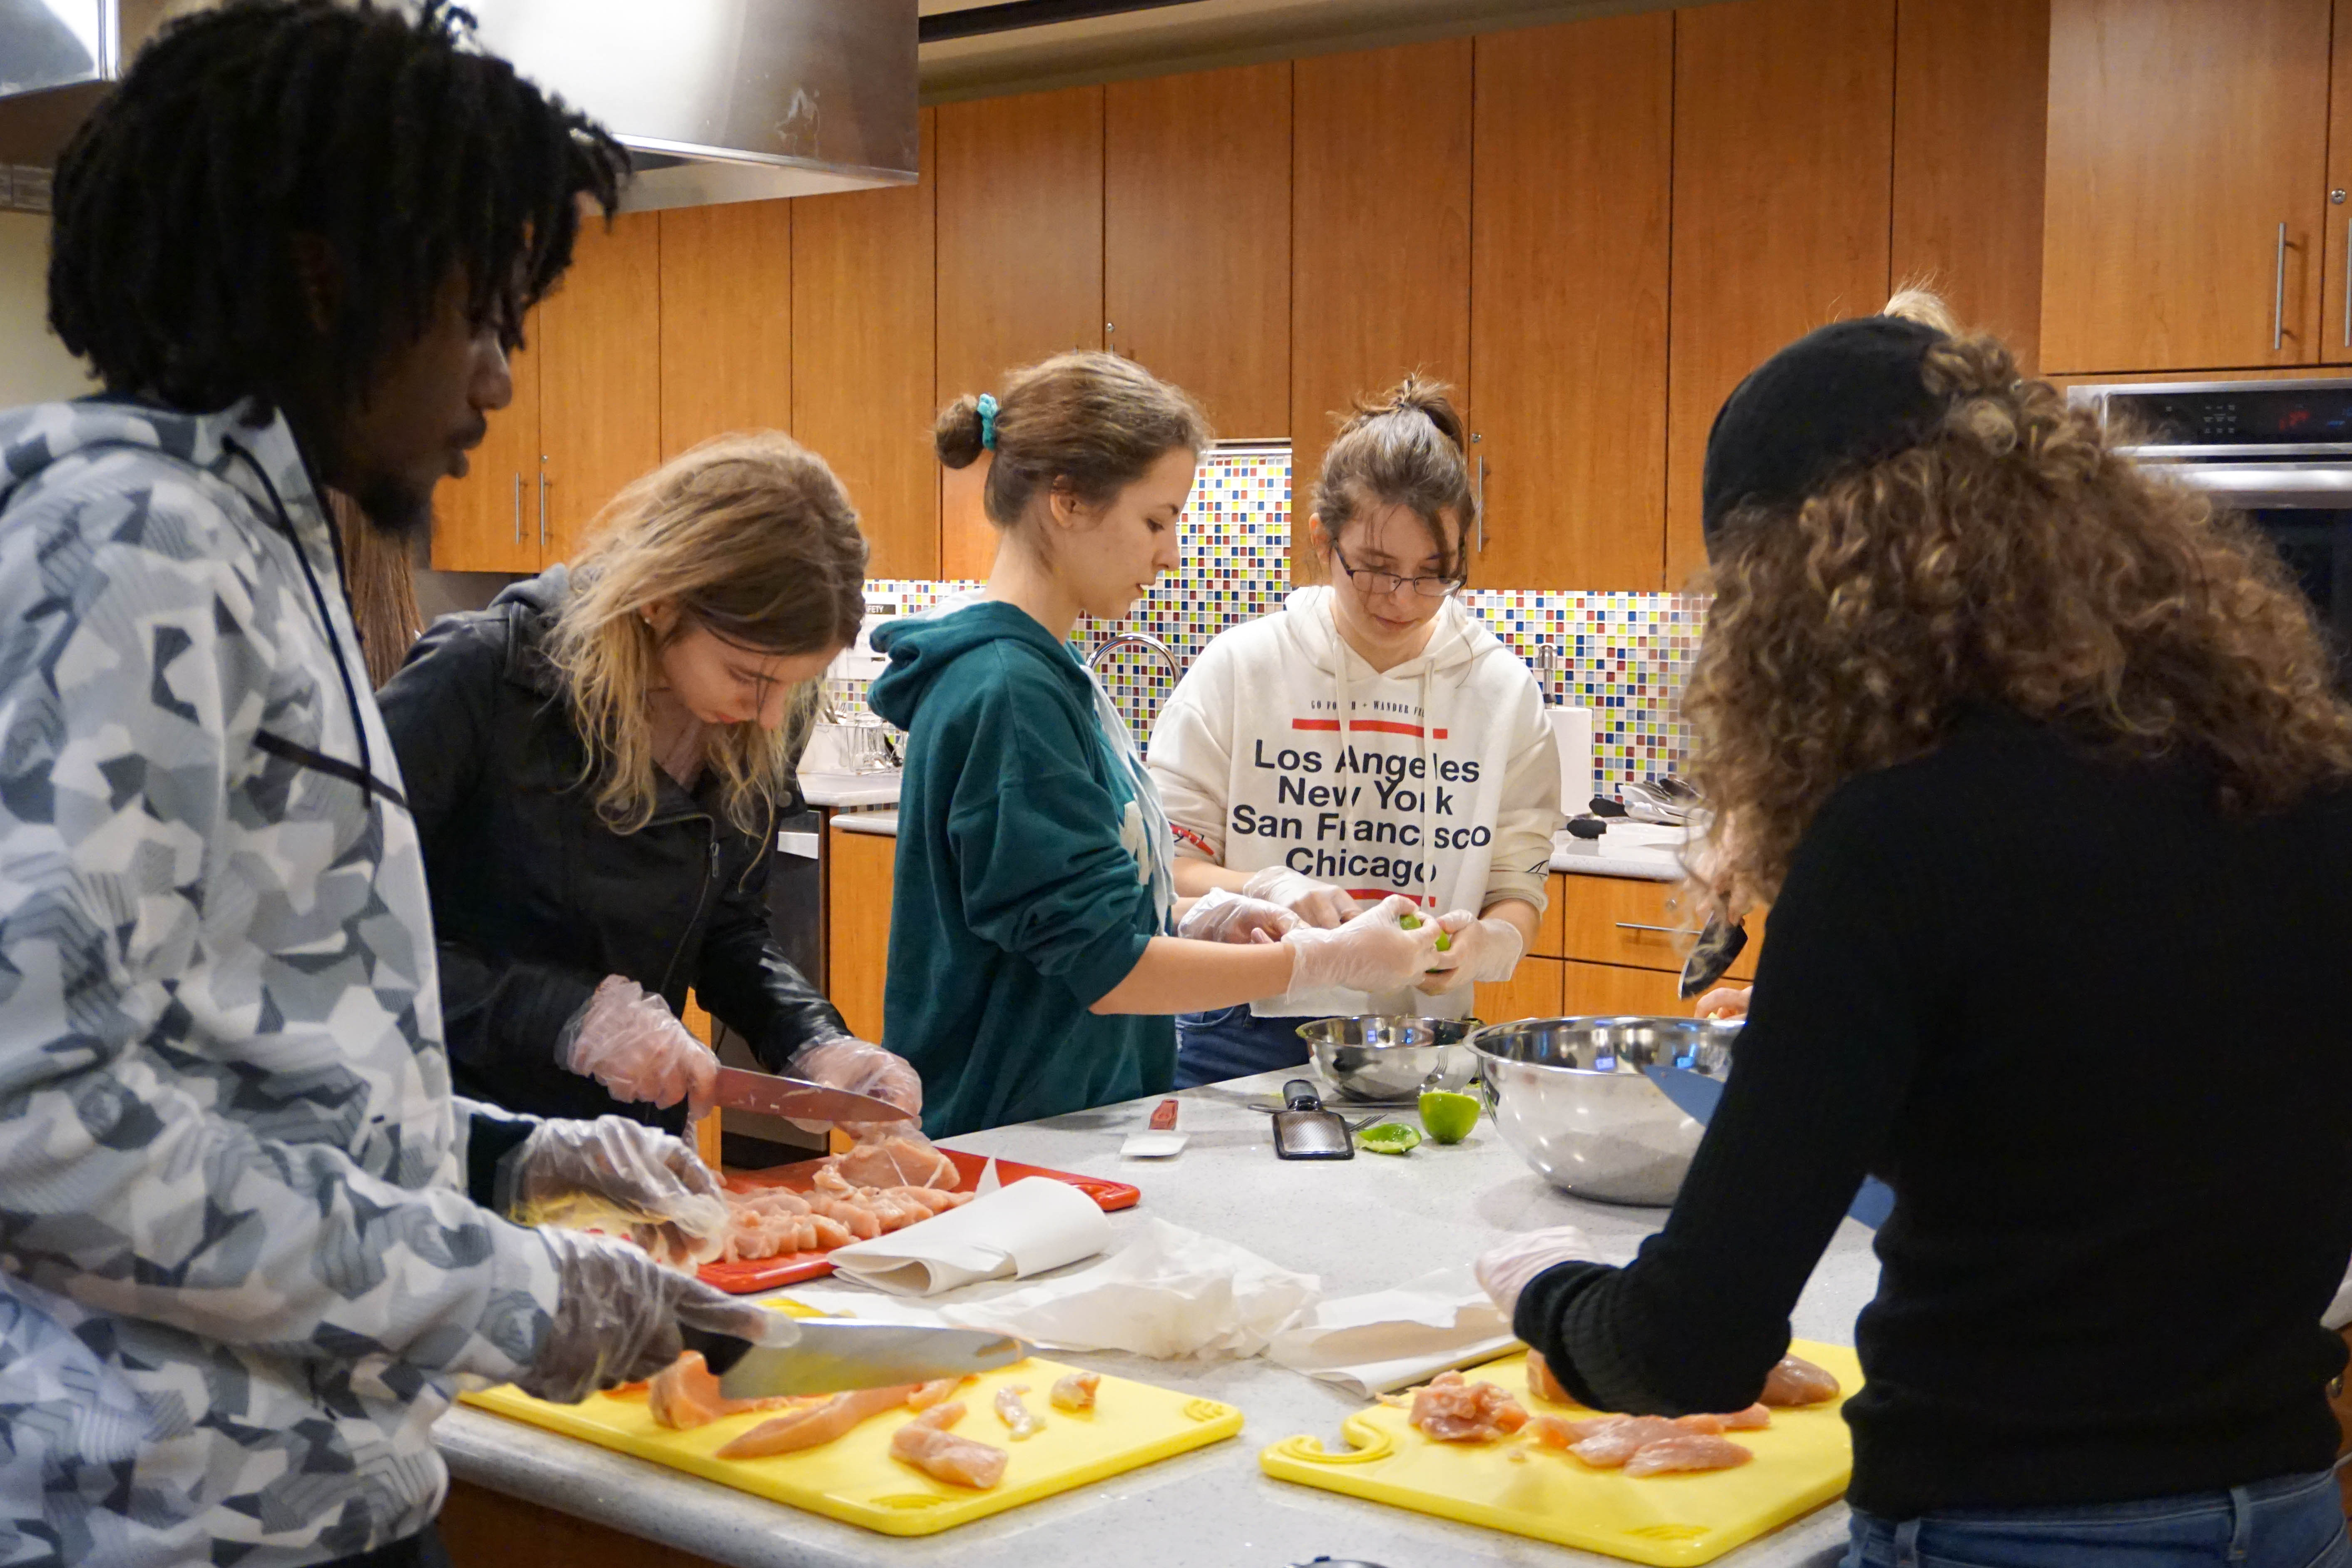 Cooking demos help build student solidarity through universal language of food